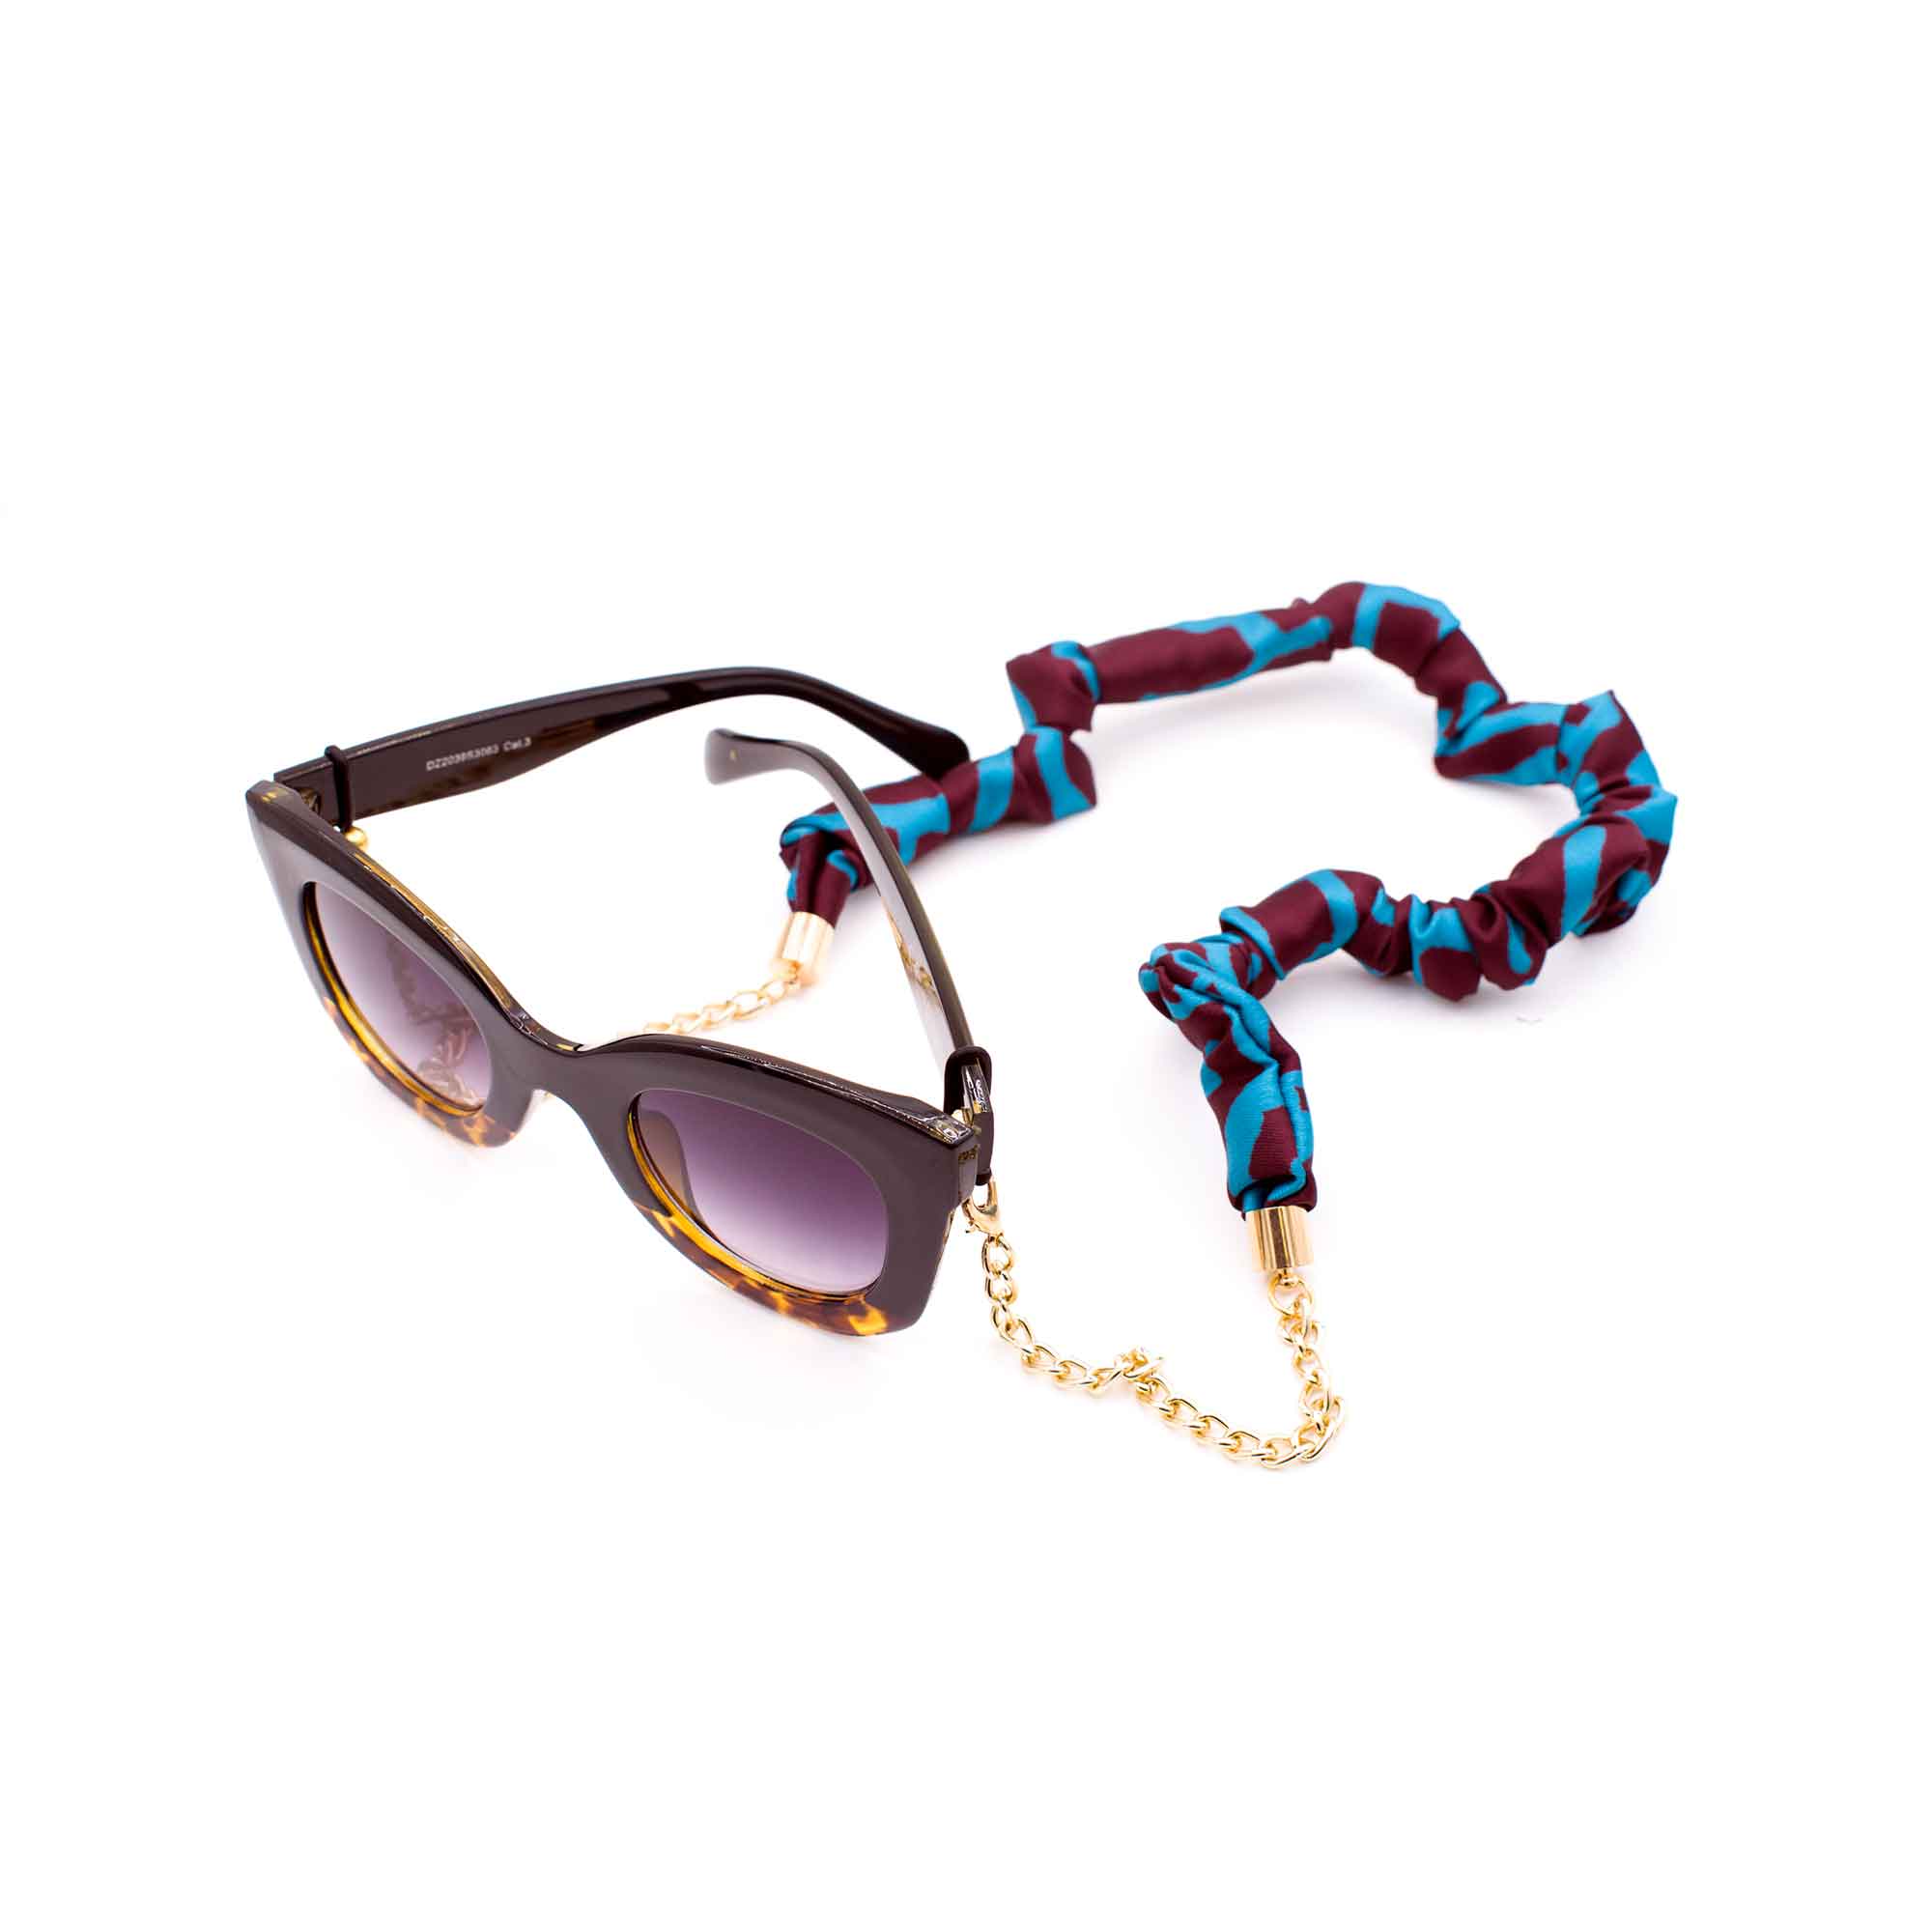 CARINE CHAIN: Λουράκι γυαλιών & μάσκας, τεχνητό μετάξι μπορντό, πετρόλ, μεταλλική αλυσίδα χρώμα χρυσό